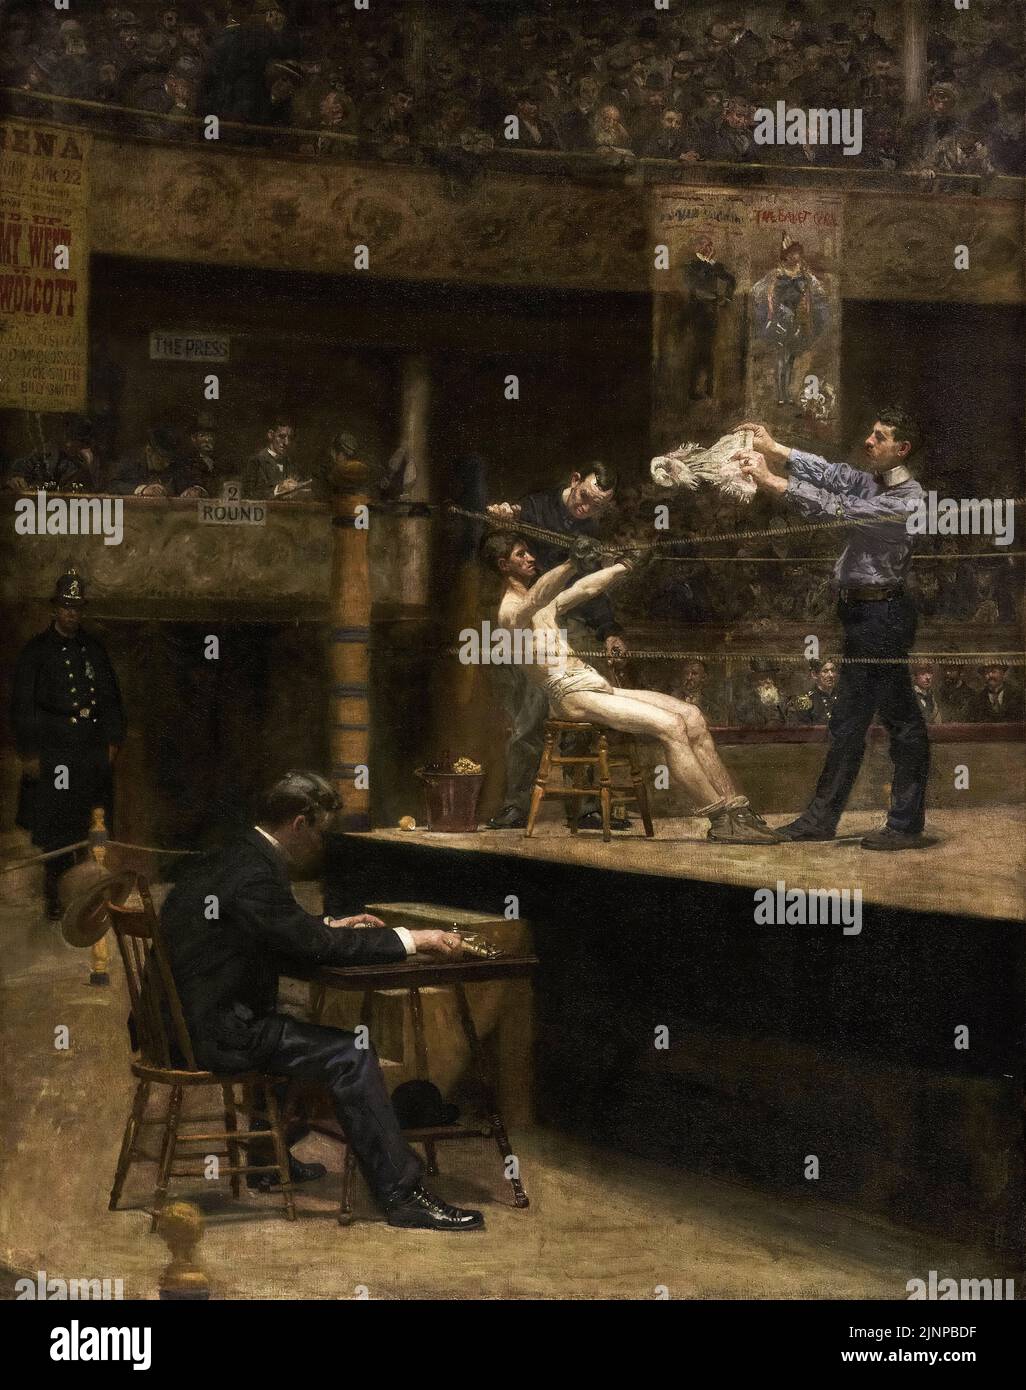 Thomas Eakins, entre rondas, pintura al óleo sobre lienzo, 1898-1899 Foto de stock